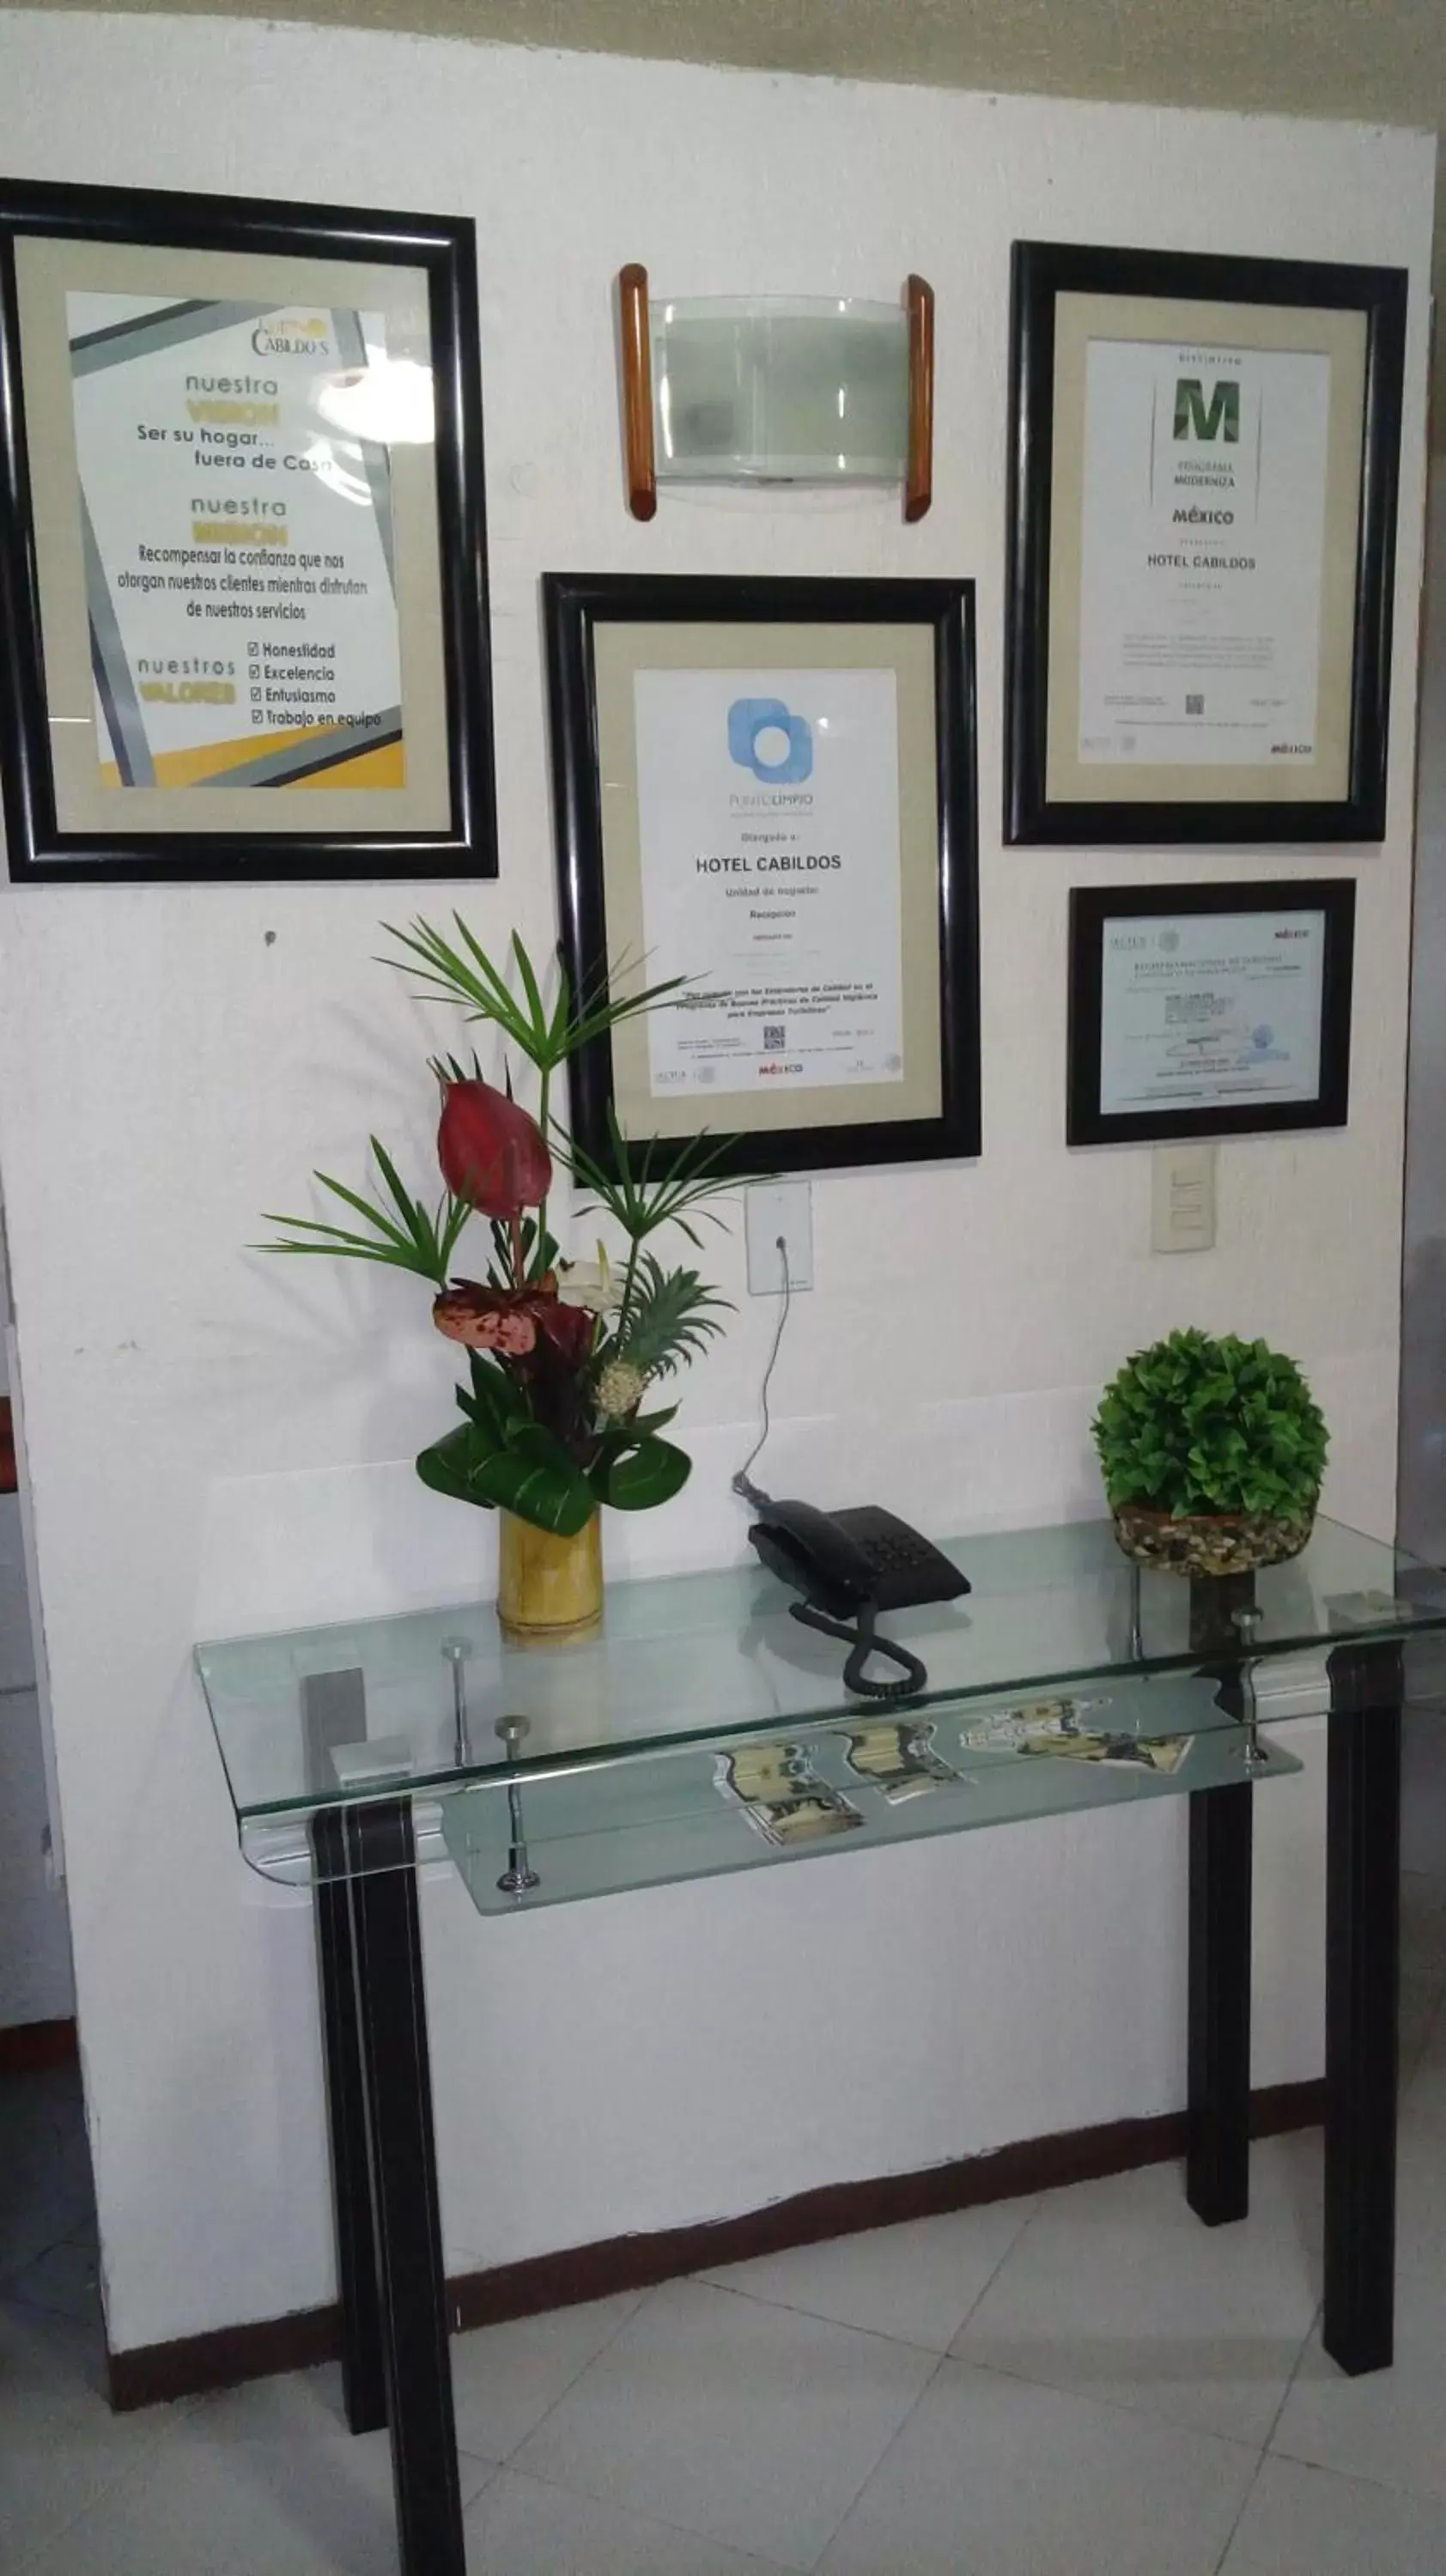 Certificate/Award in Hotel Cabildos